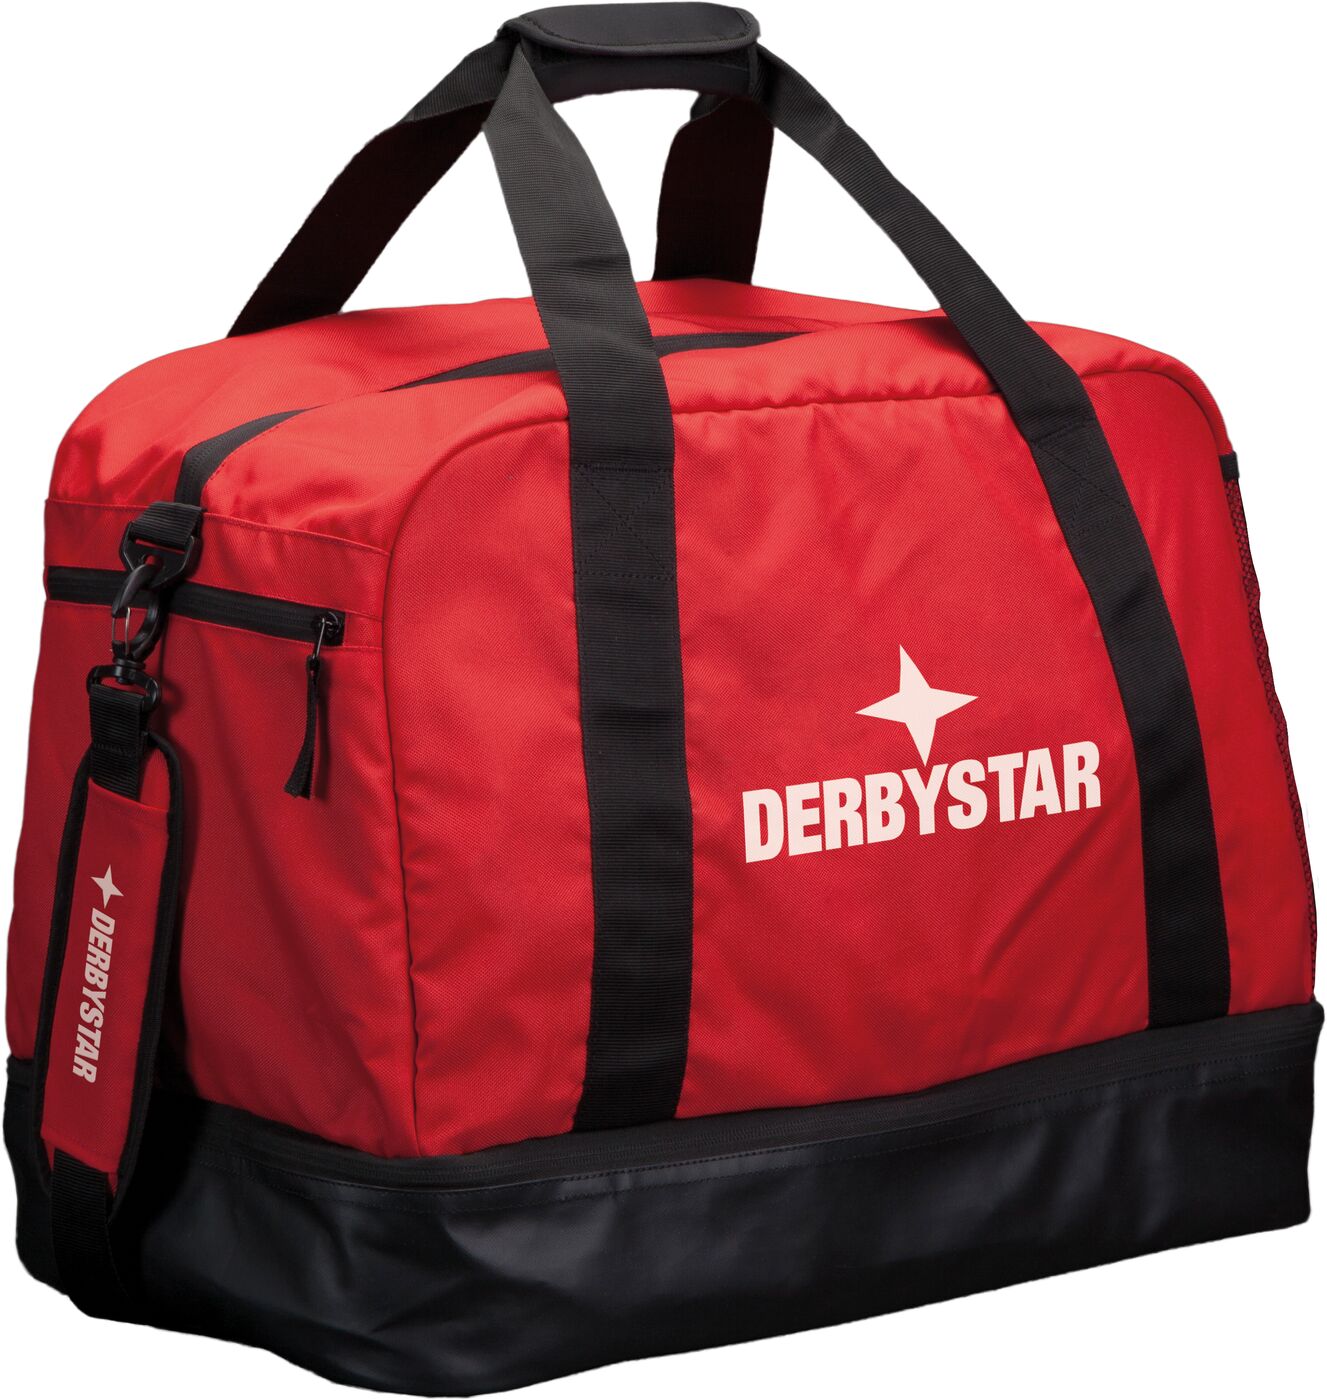 Derbystar Sporttasche Hyper Pro, rot, S: 50 x 27 x 36 cm